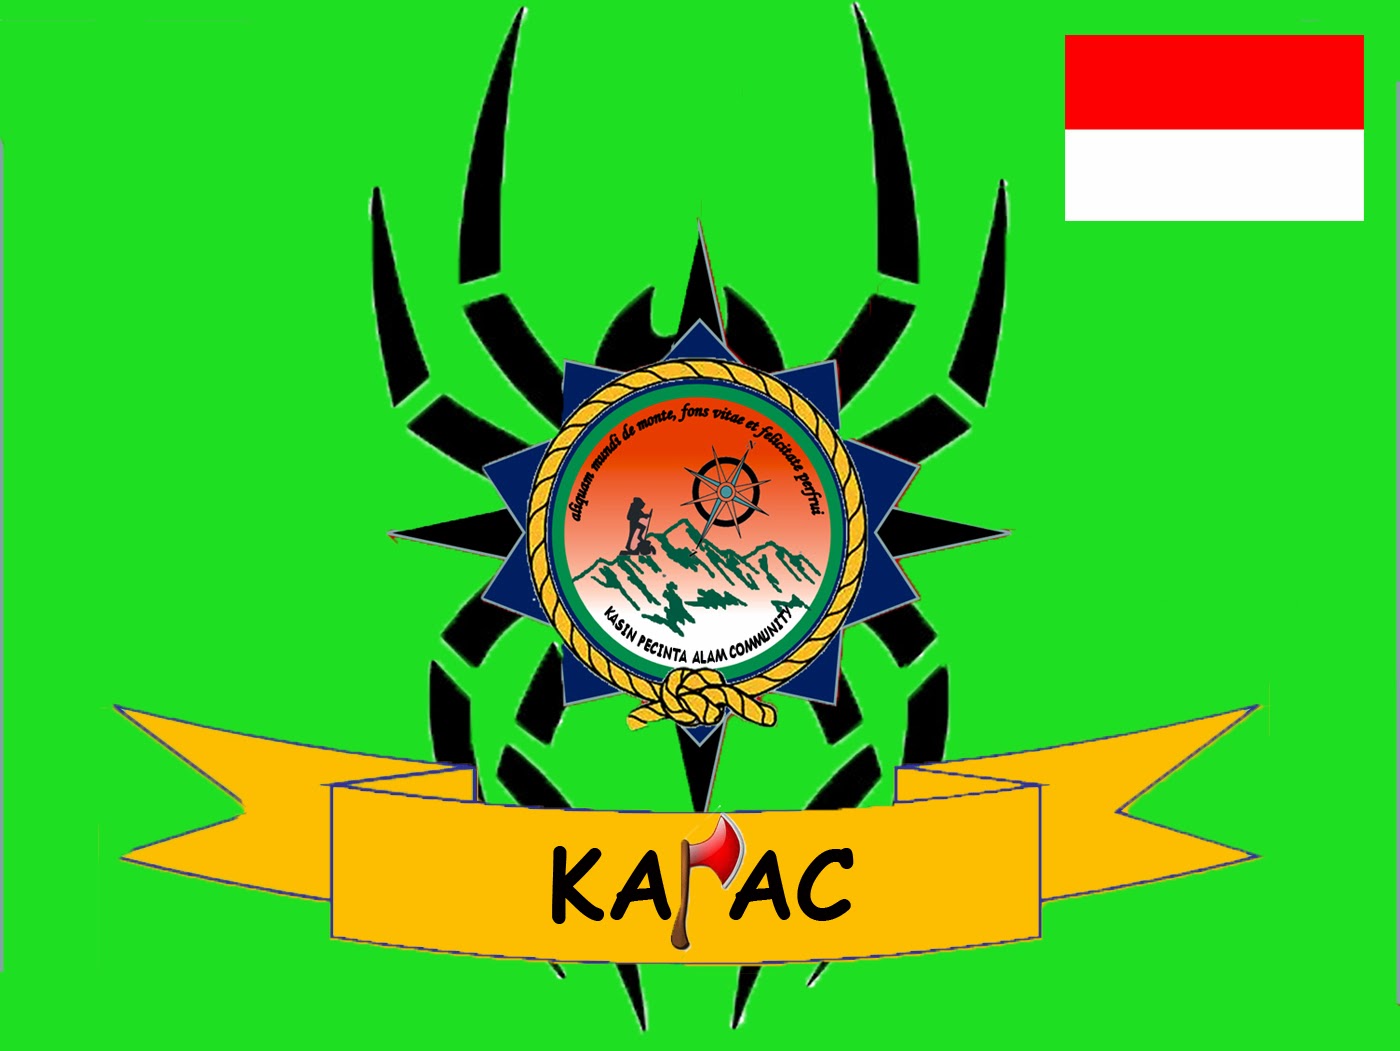 KAPAC (kasin pecinta alam community)